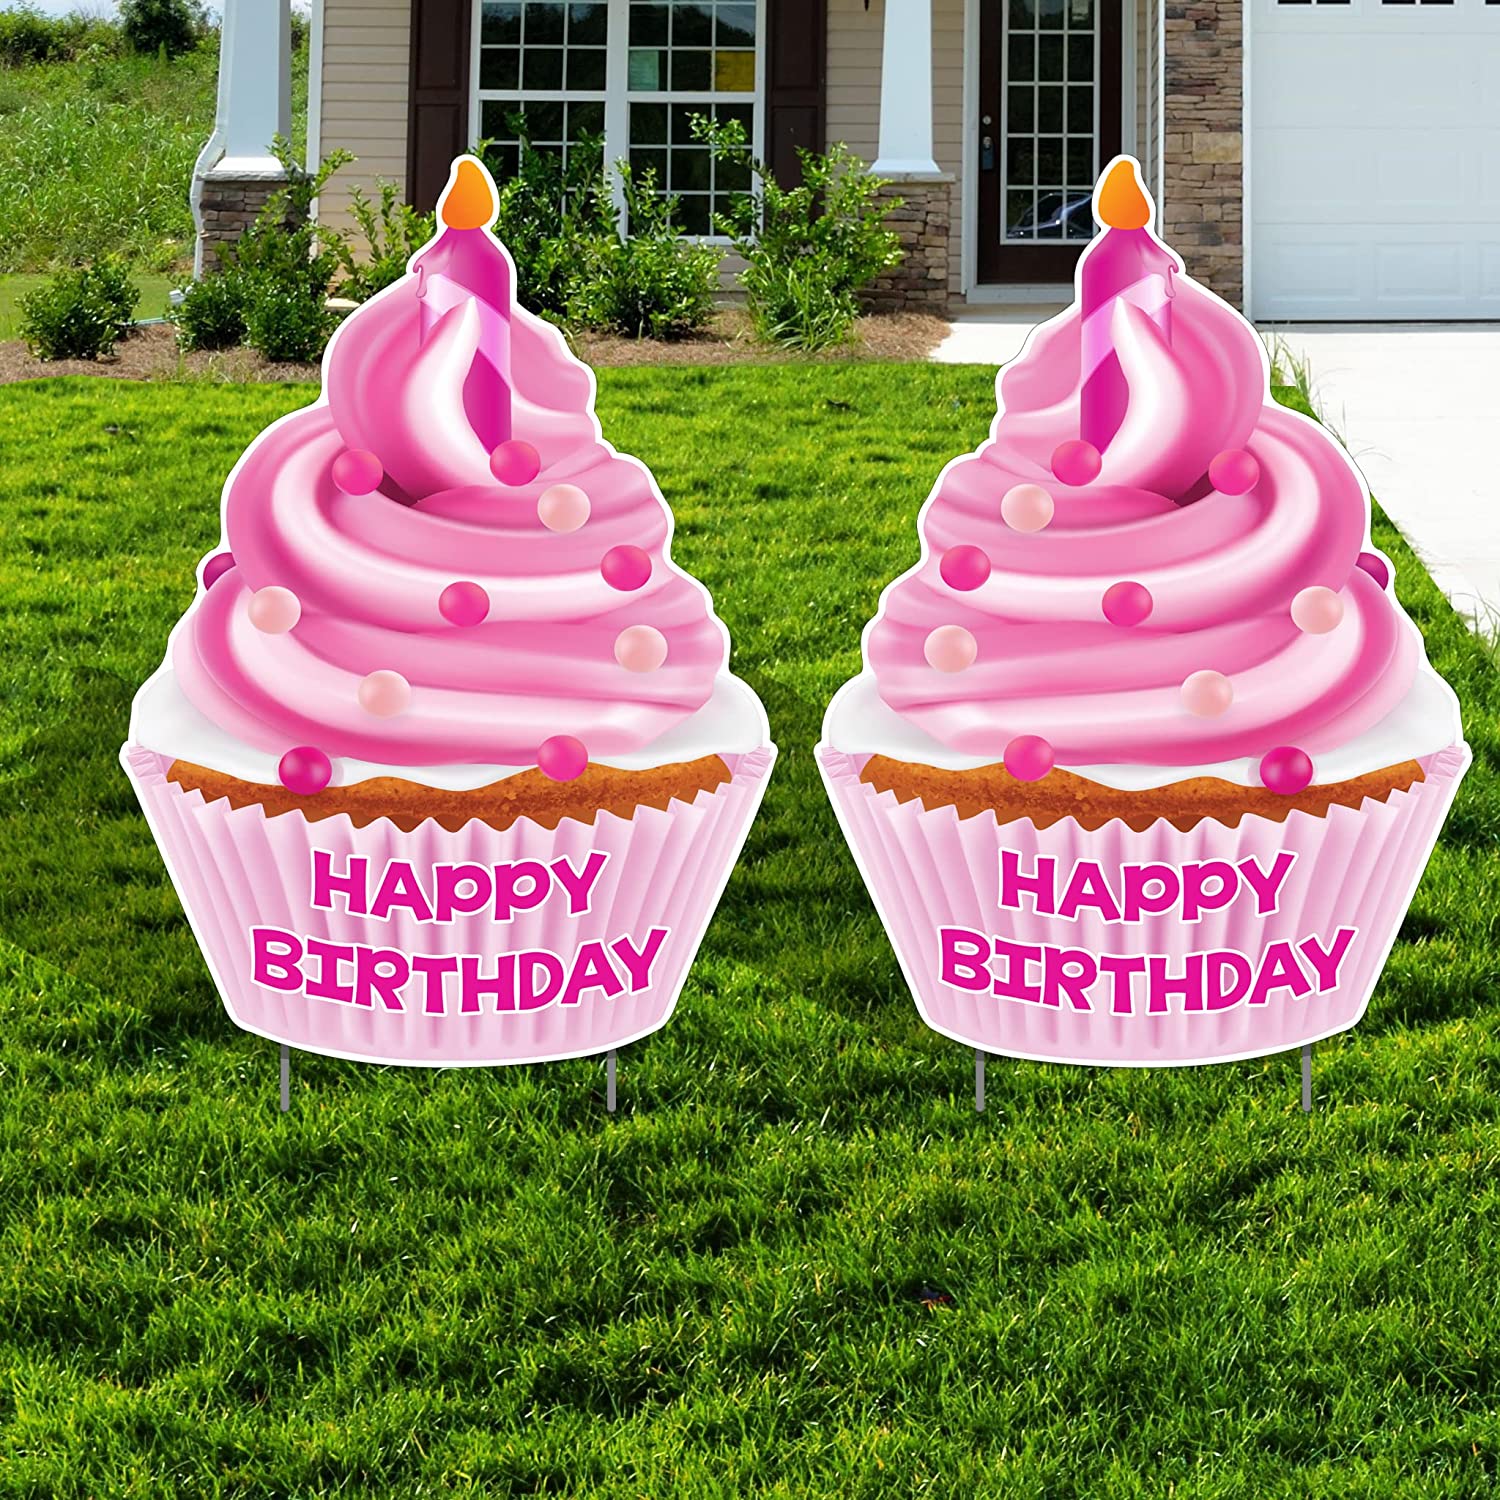 Jumbo Happy Birthday Cupcake Yard Sign Set of 2